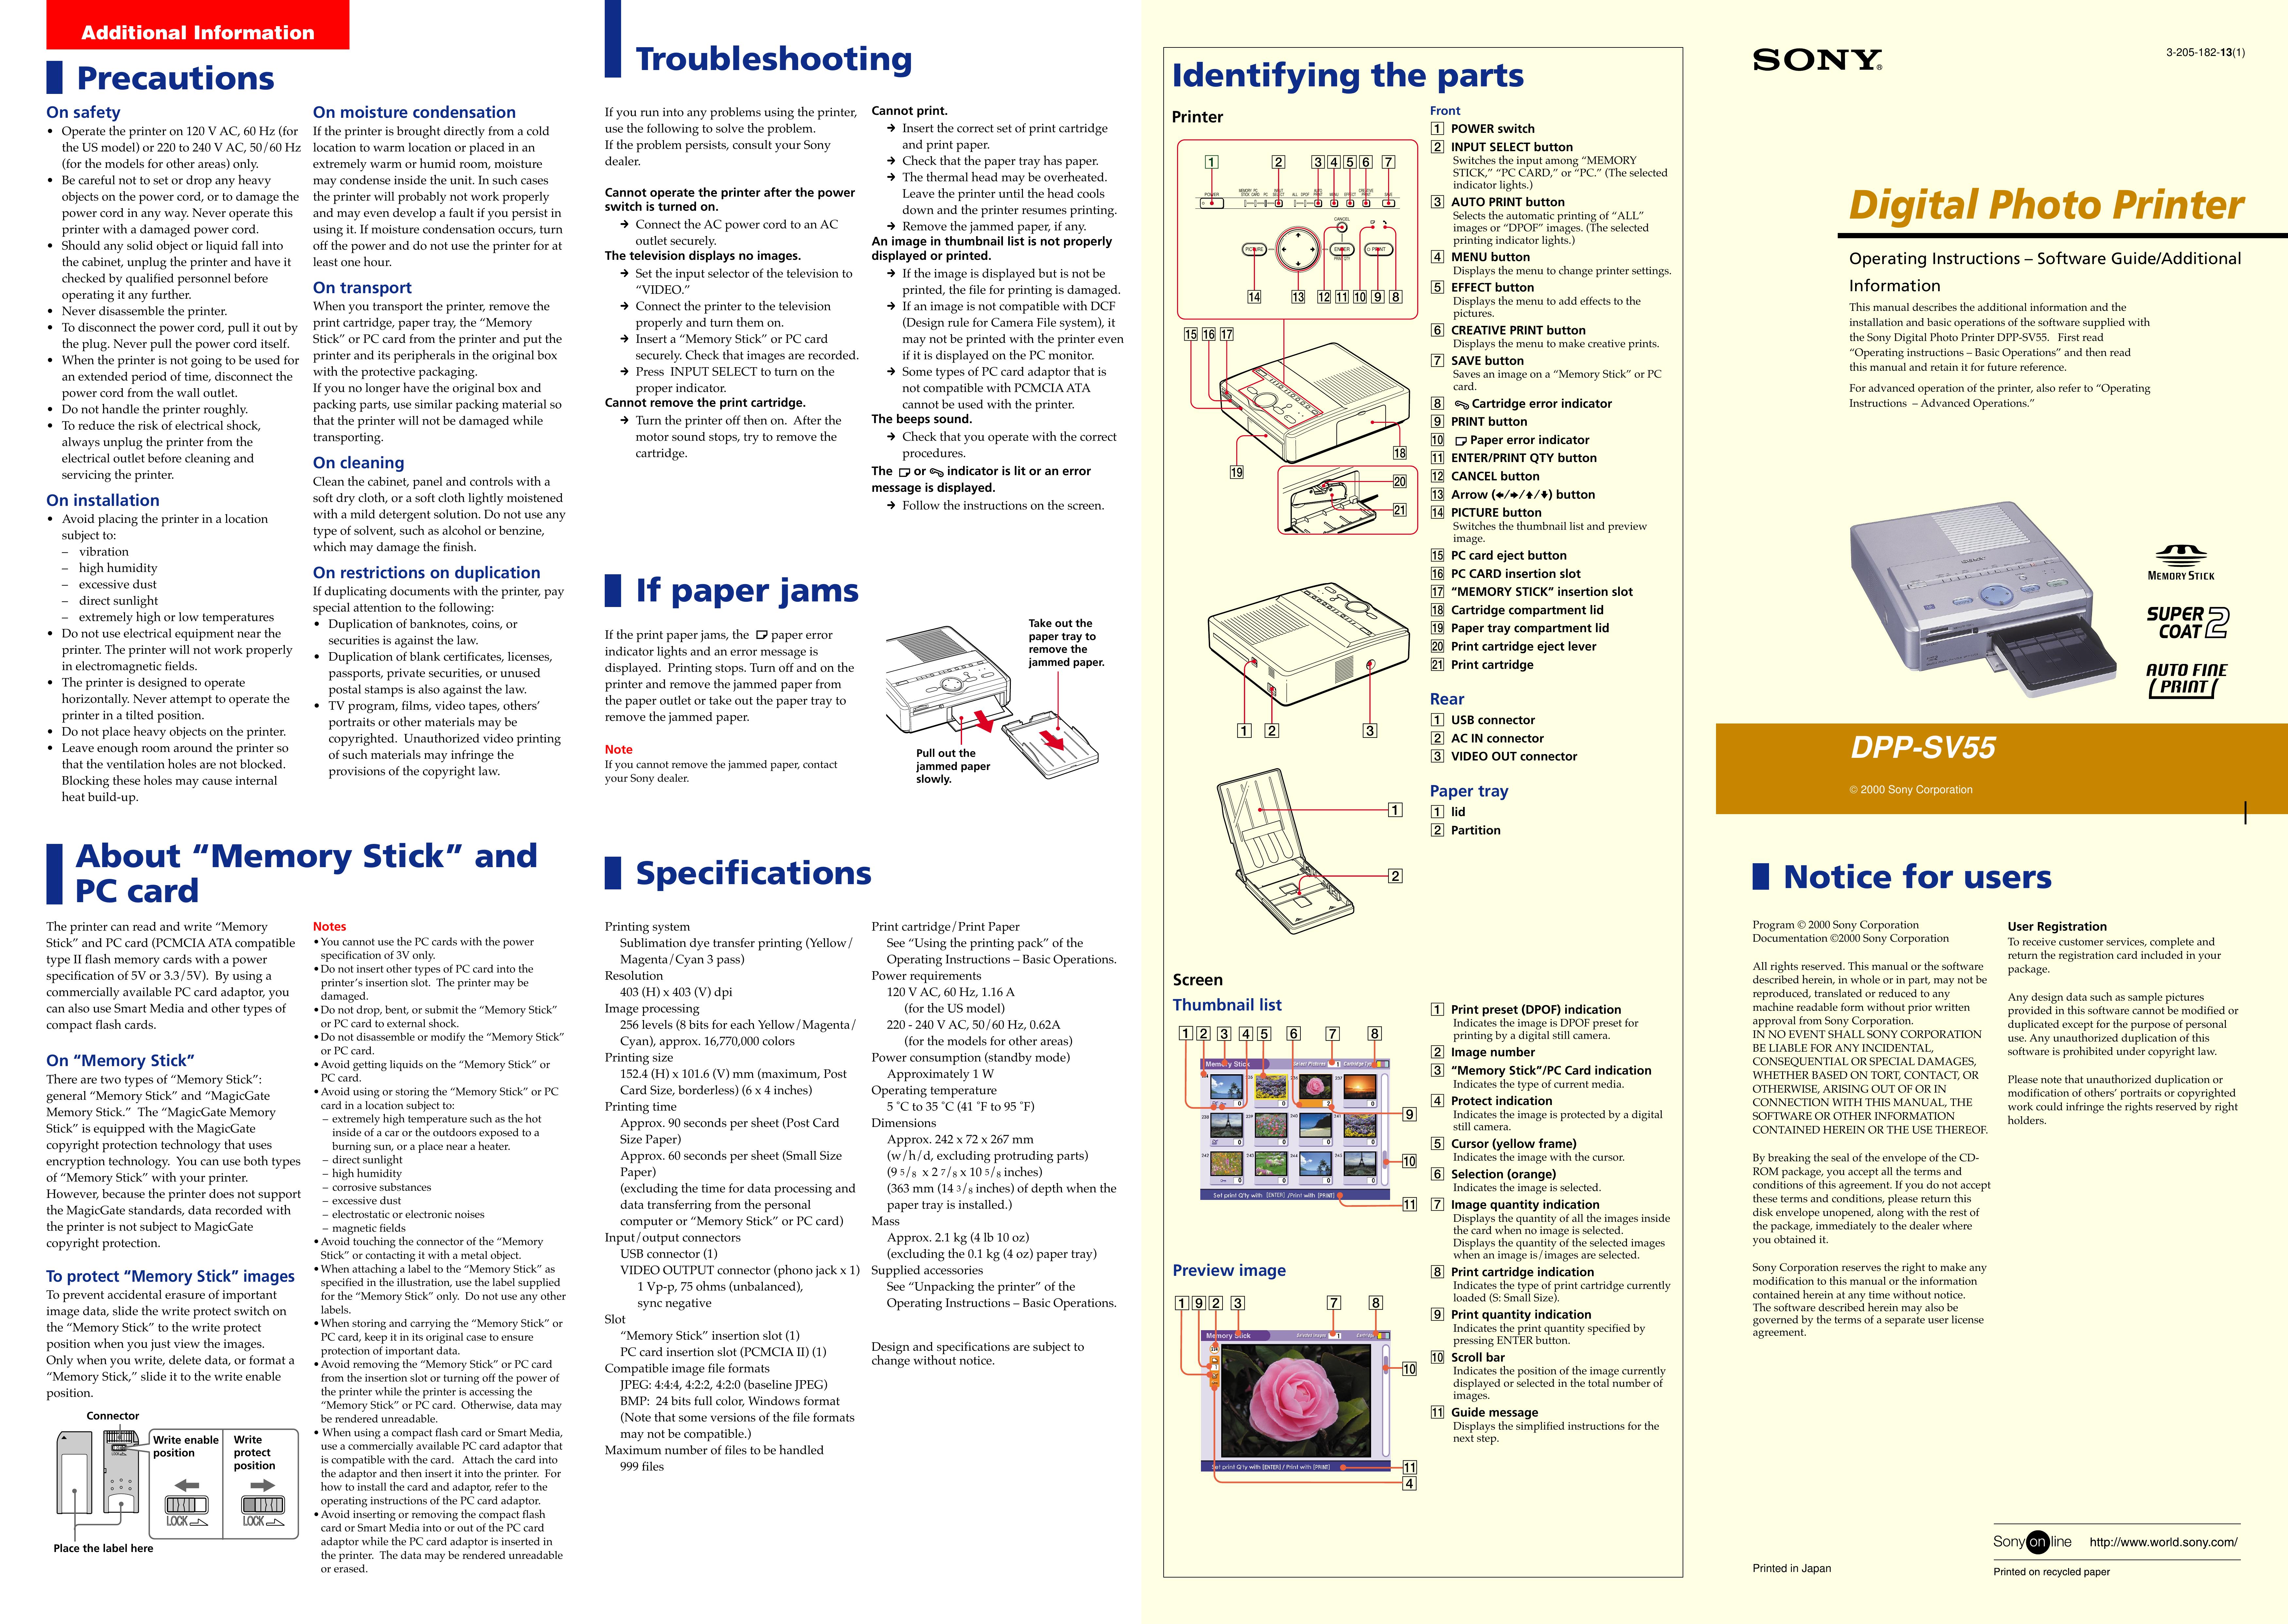 Sony DPP-SV55 Photo Printer User Manual